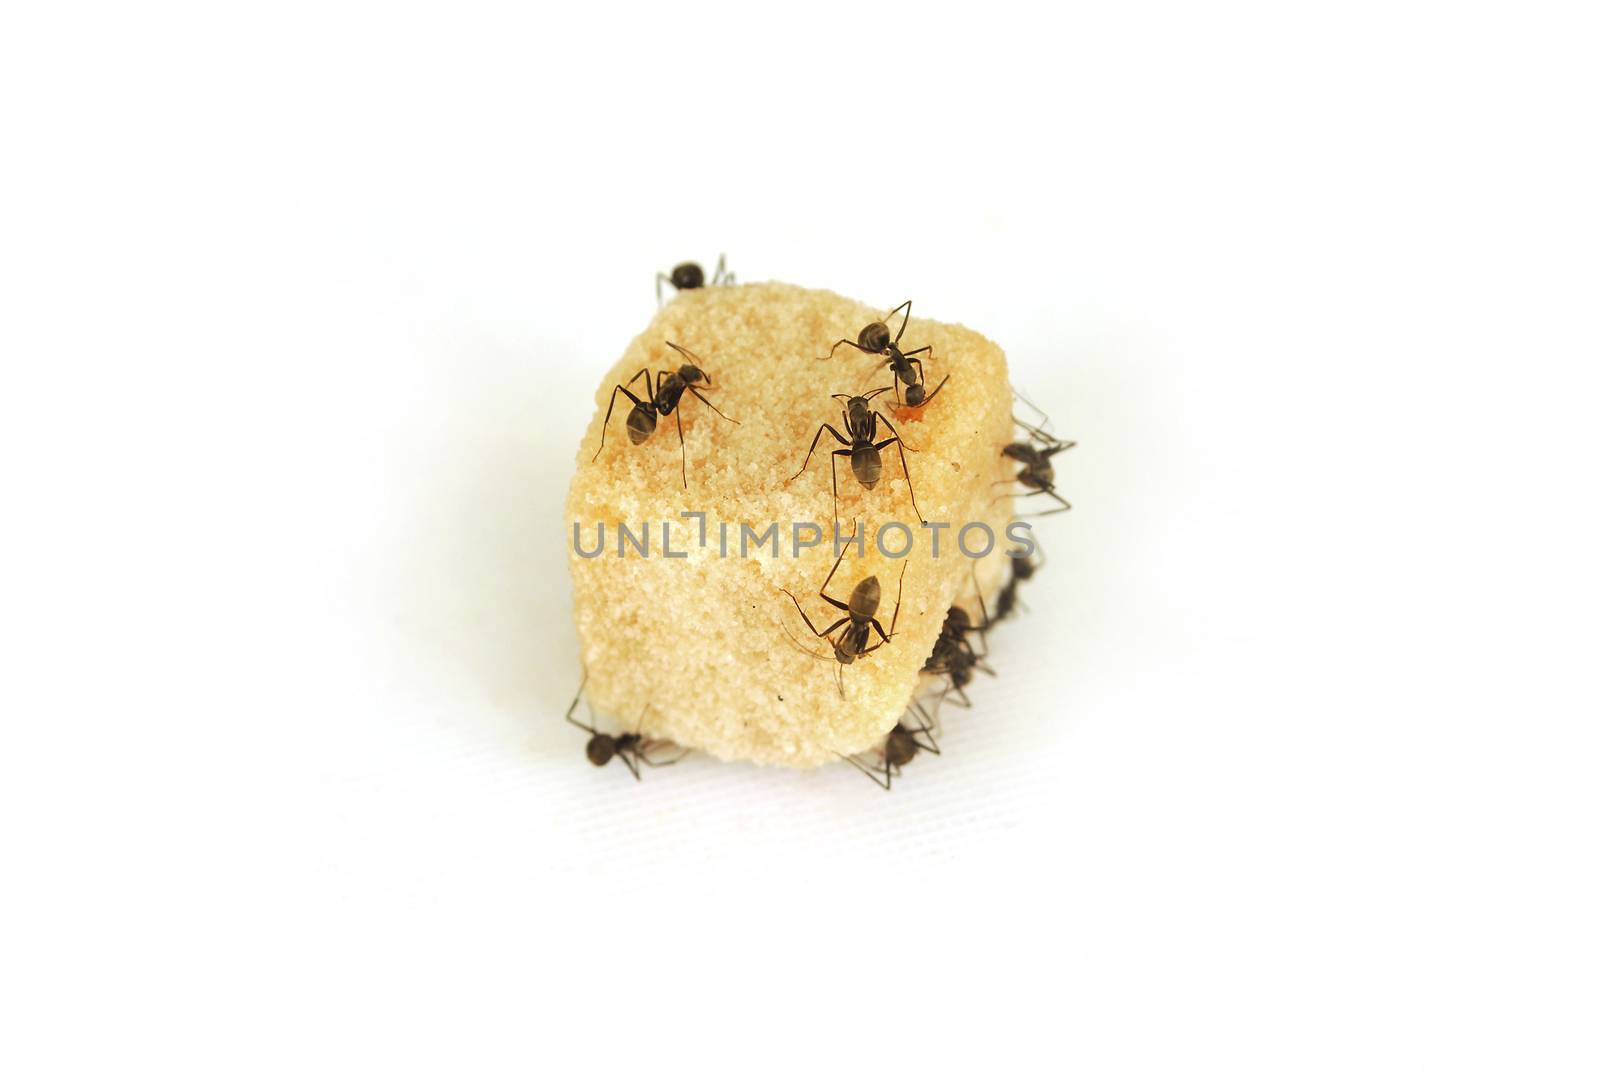 Ants eat sugar on white background.